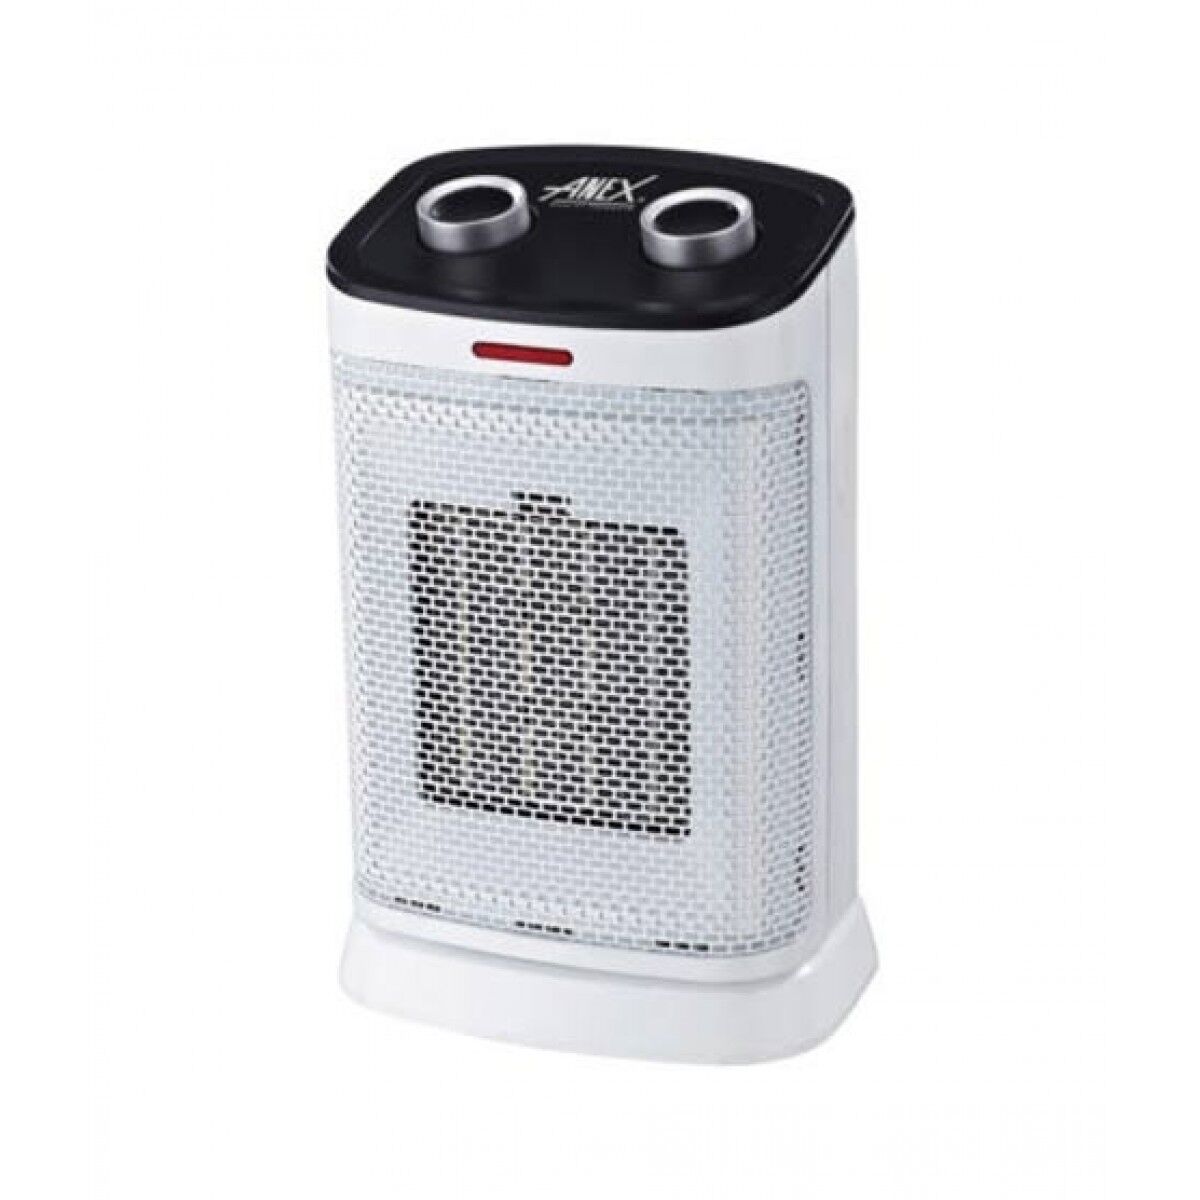 Anex Ceramic Fan Heater AG-5007